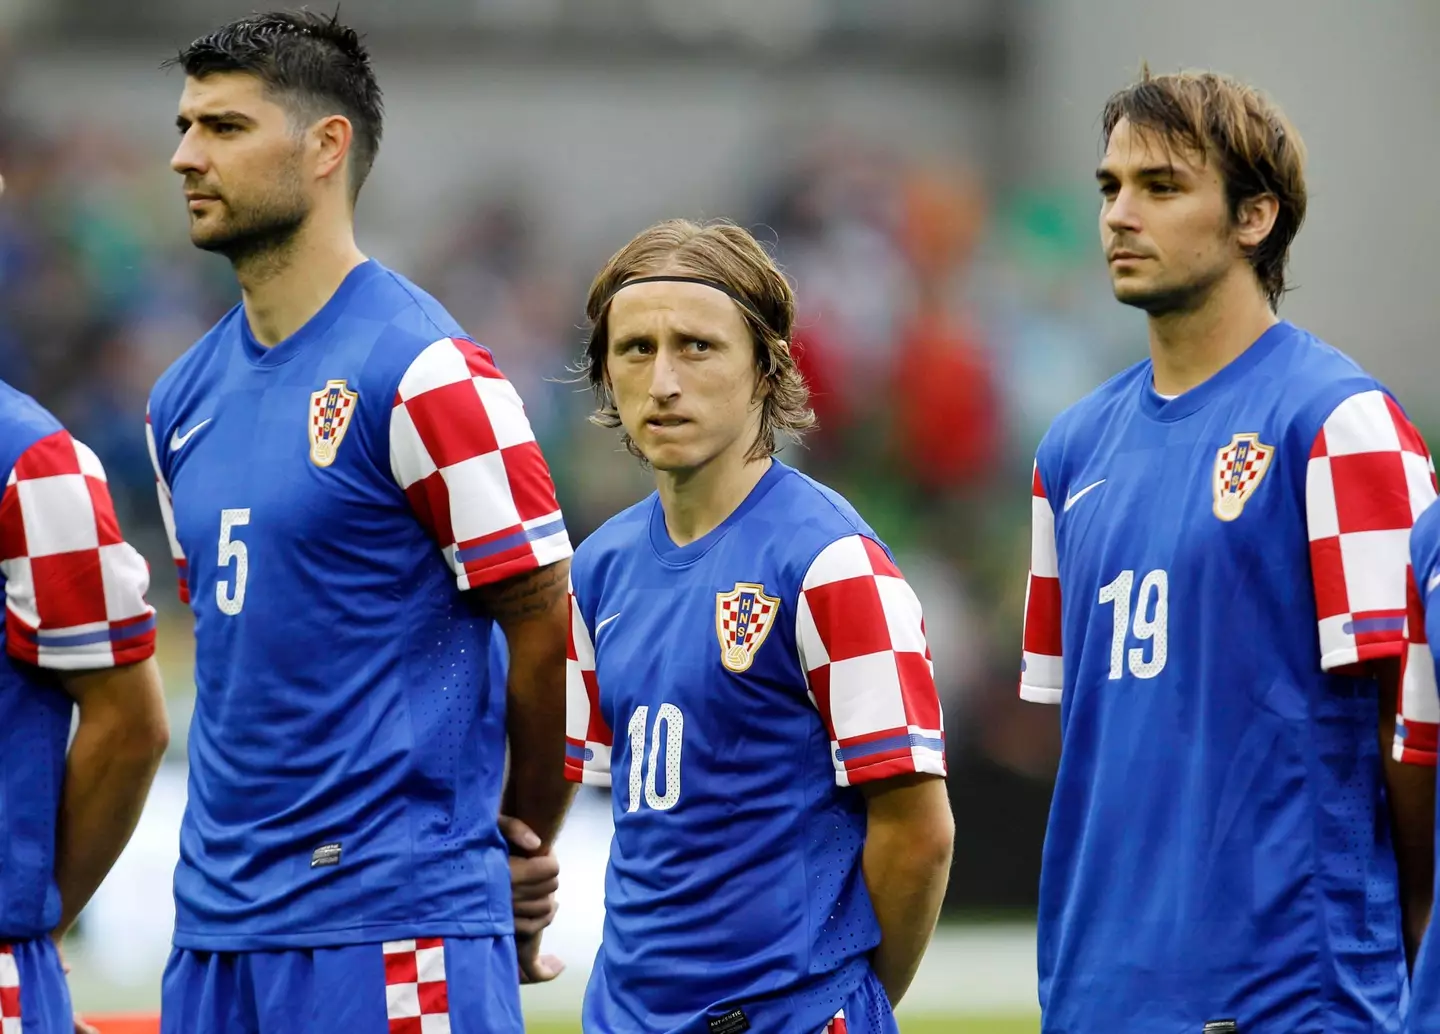 Vedran Corluka, Luka Modric and Niko Kranjcar during a Croatia game. (Image